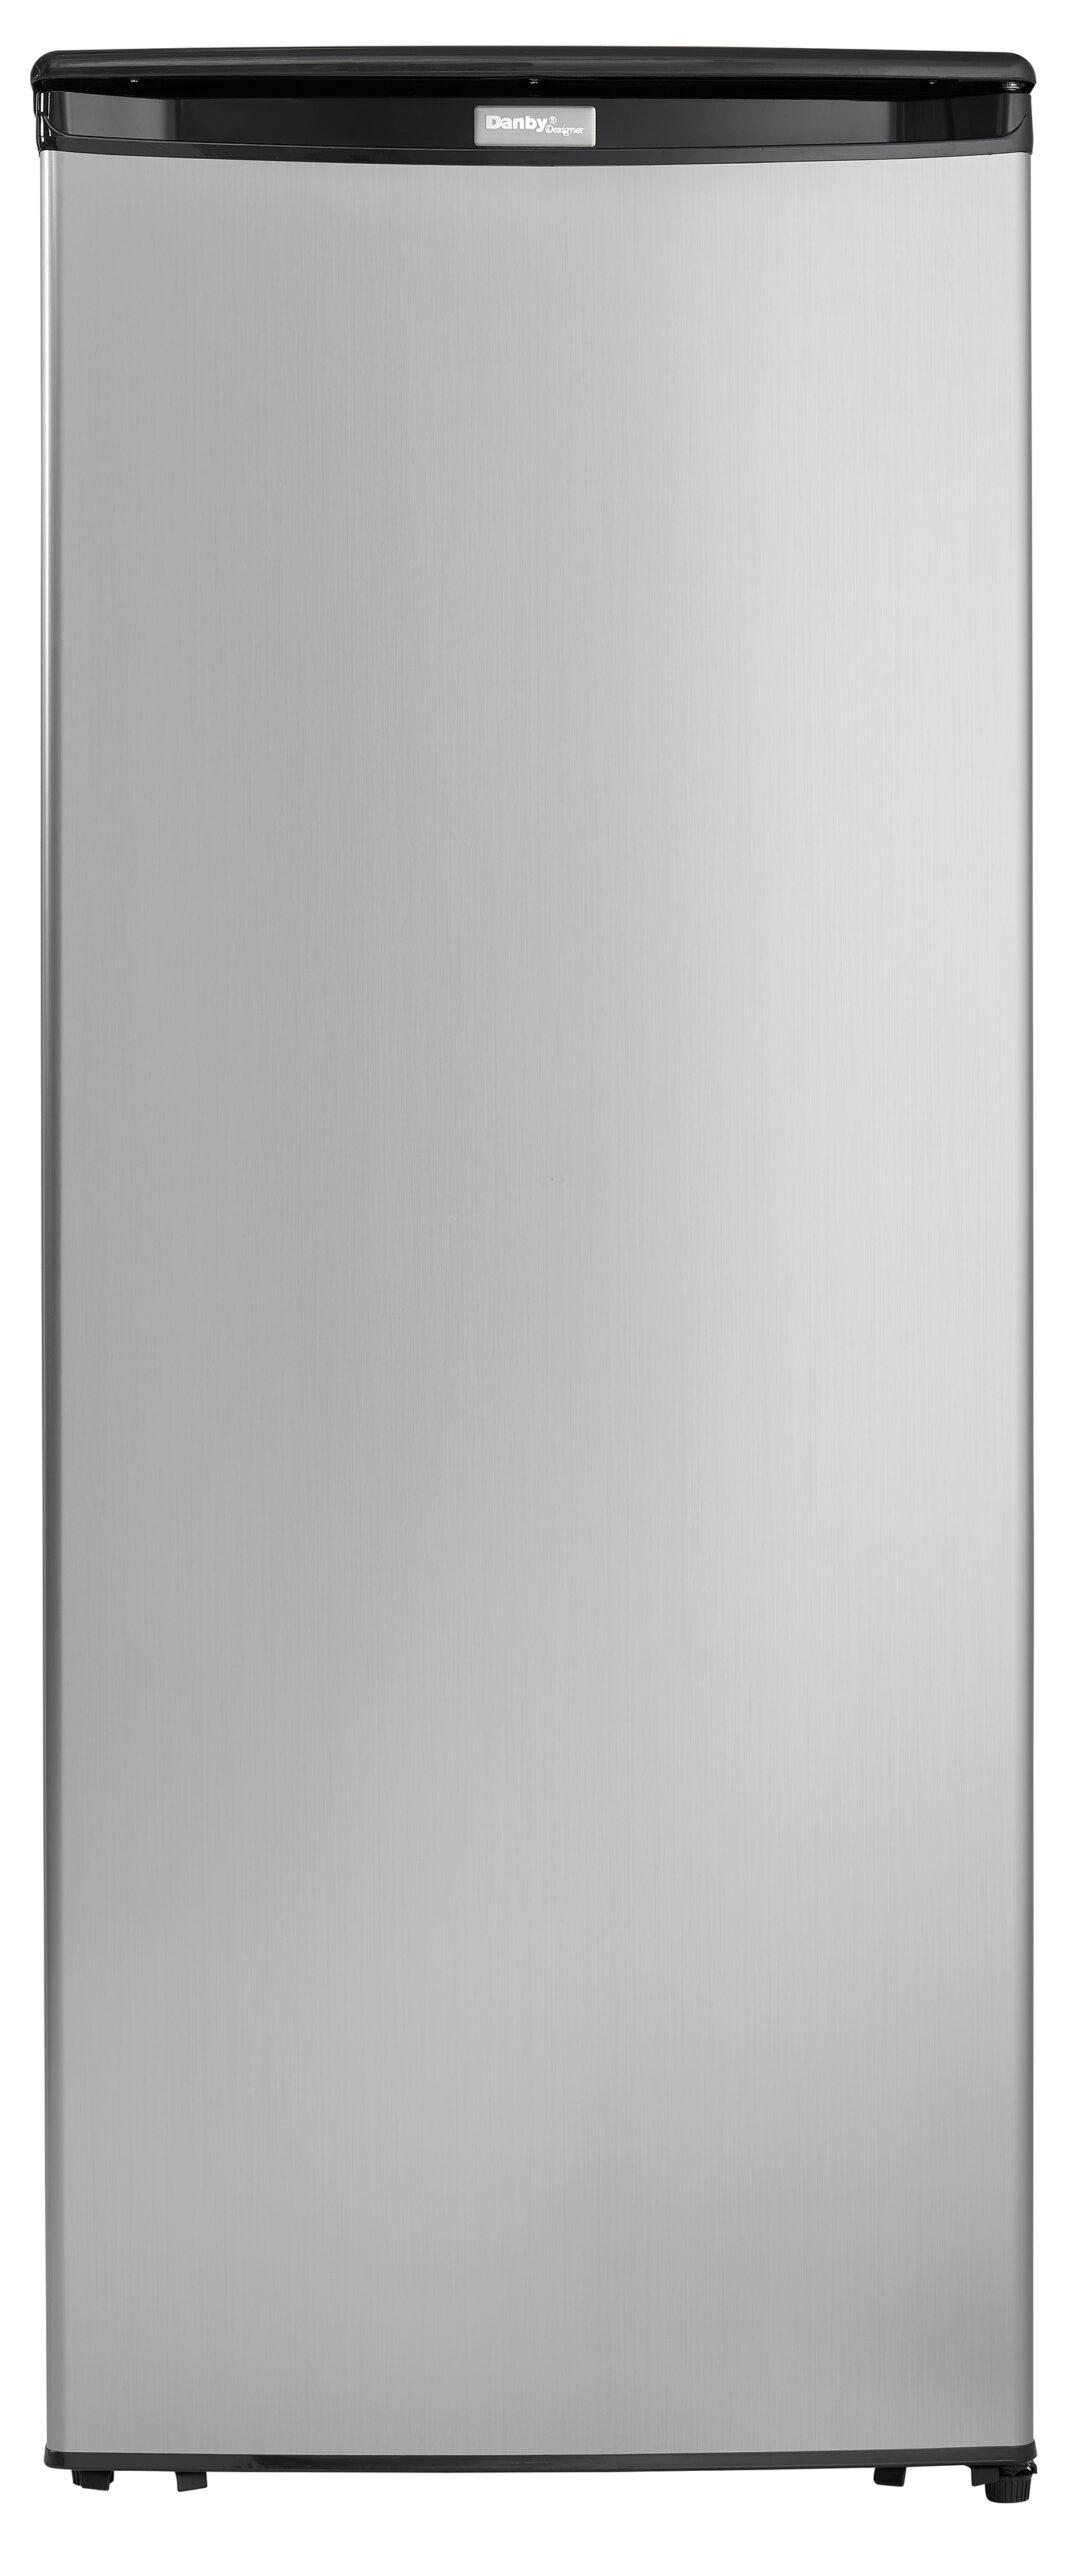 Danby Designer 8.5 cu. ft. Upright Freezer in Stainless Steel